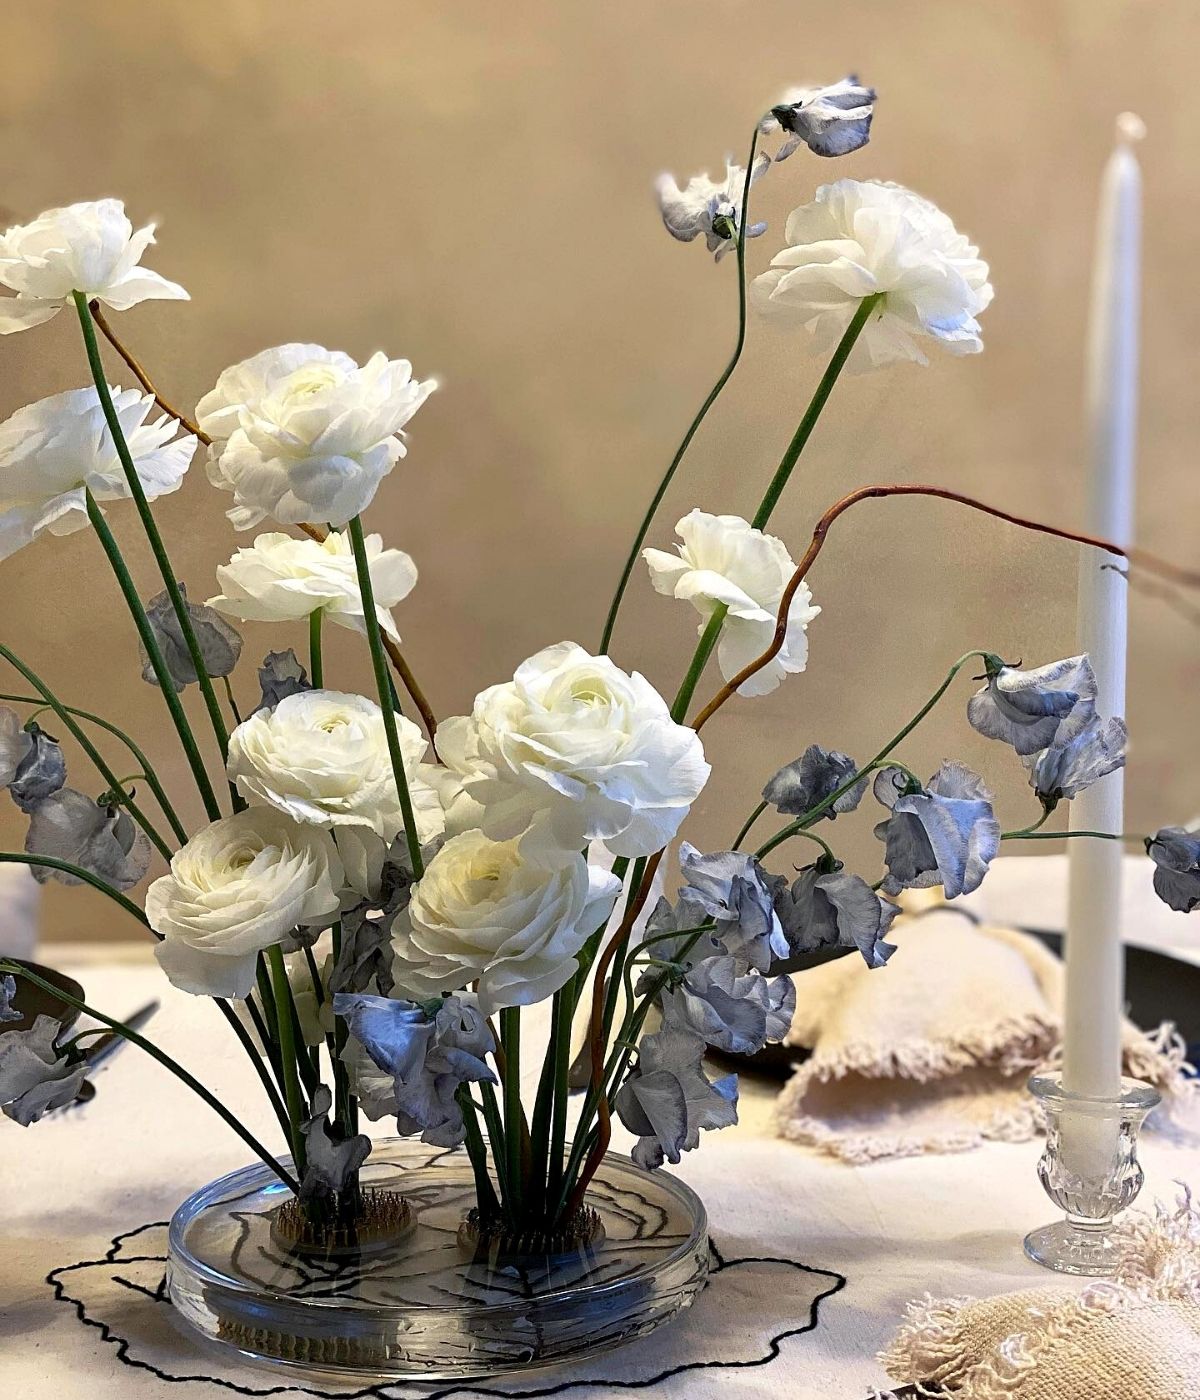 Table Setting With White Ranunculus in Ikebana Style by Rachel Clark on Thursd